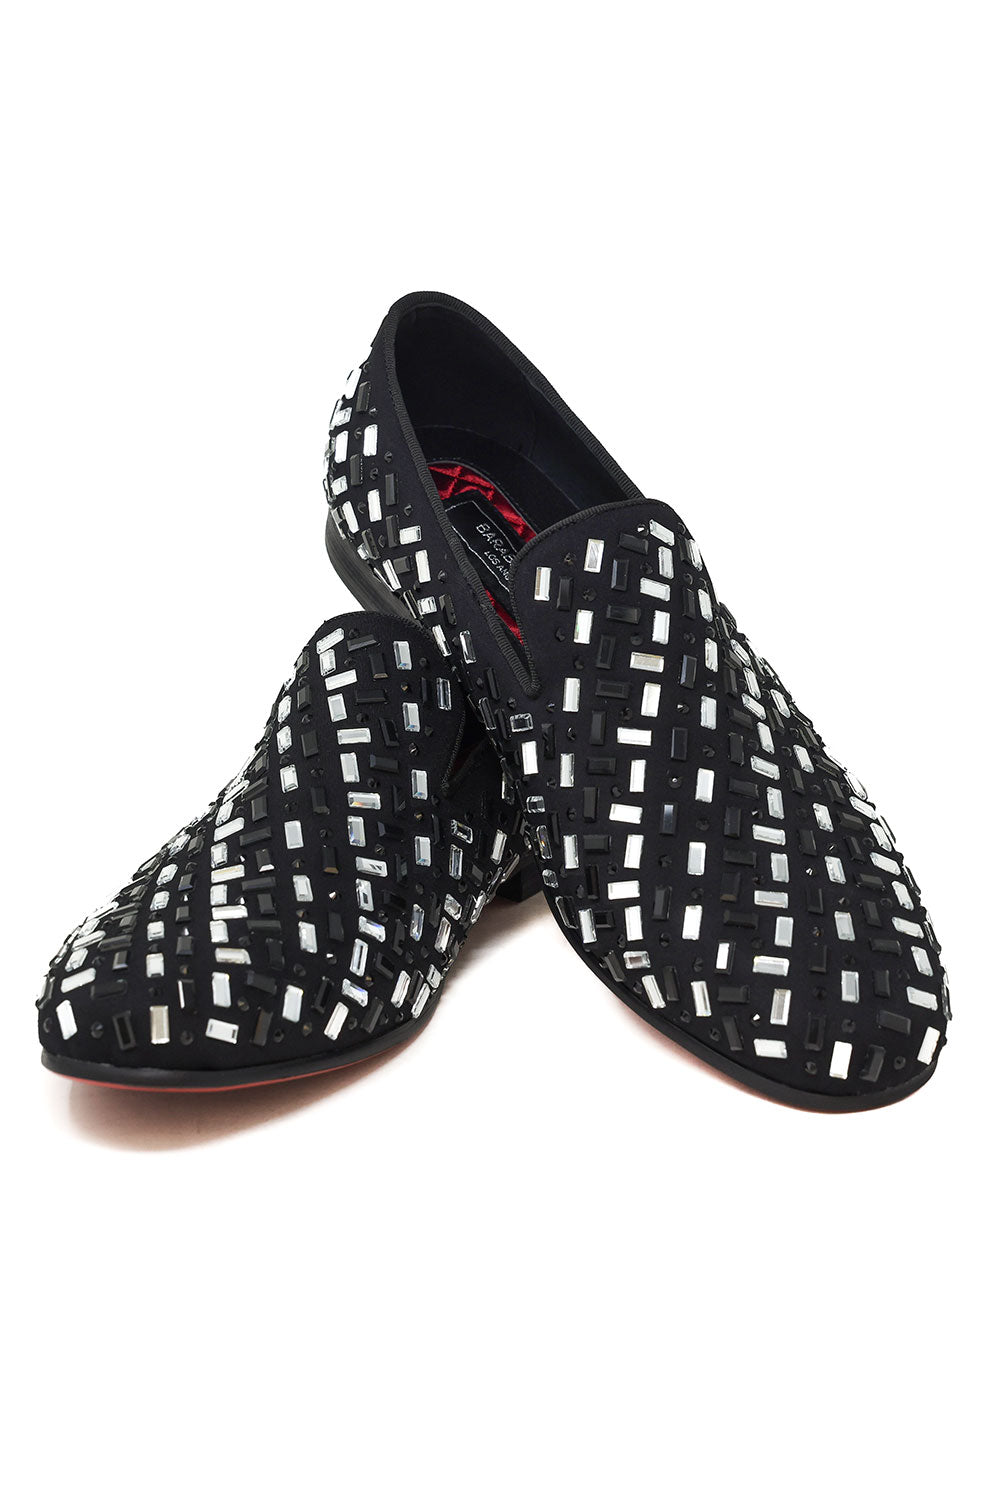 BARABAS Men's Rectangle Rhinestone Jewel Slip On Dress Shoes 2ESH4 Black